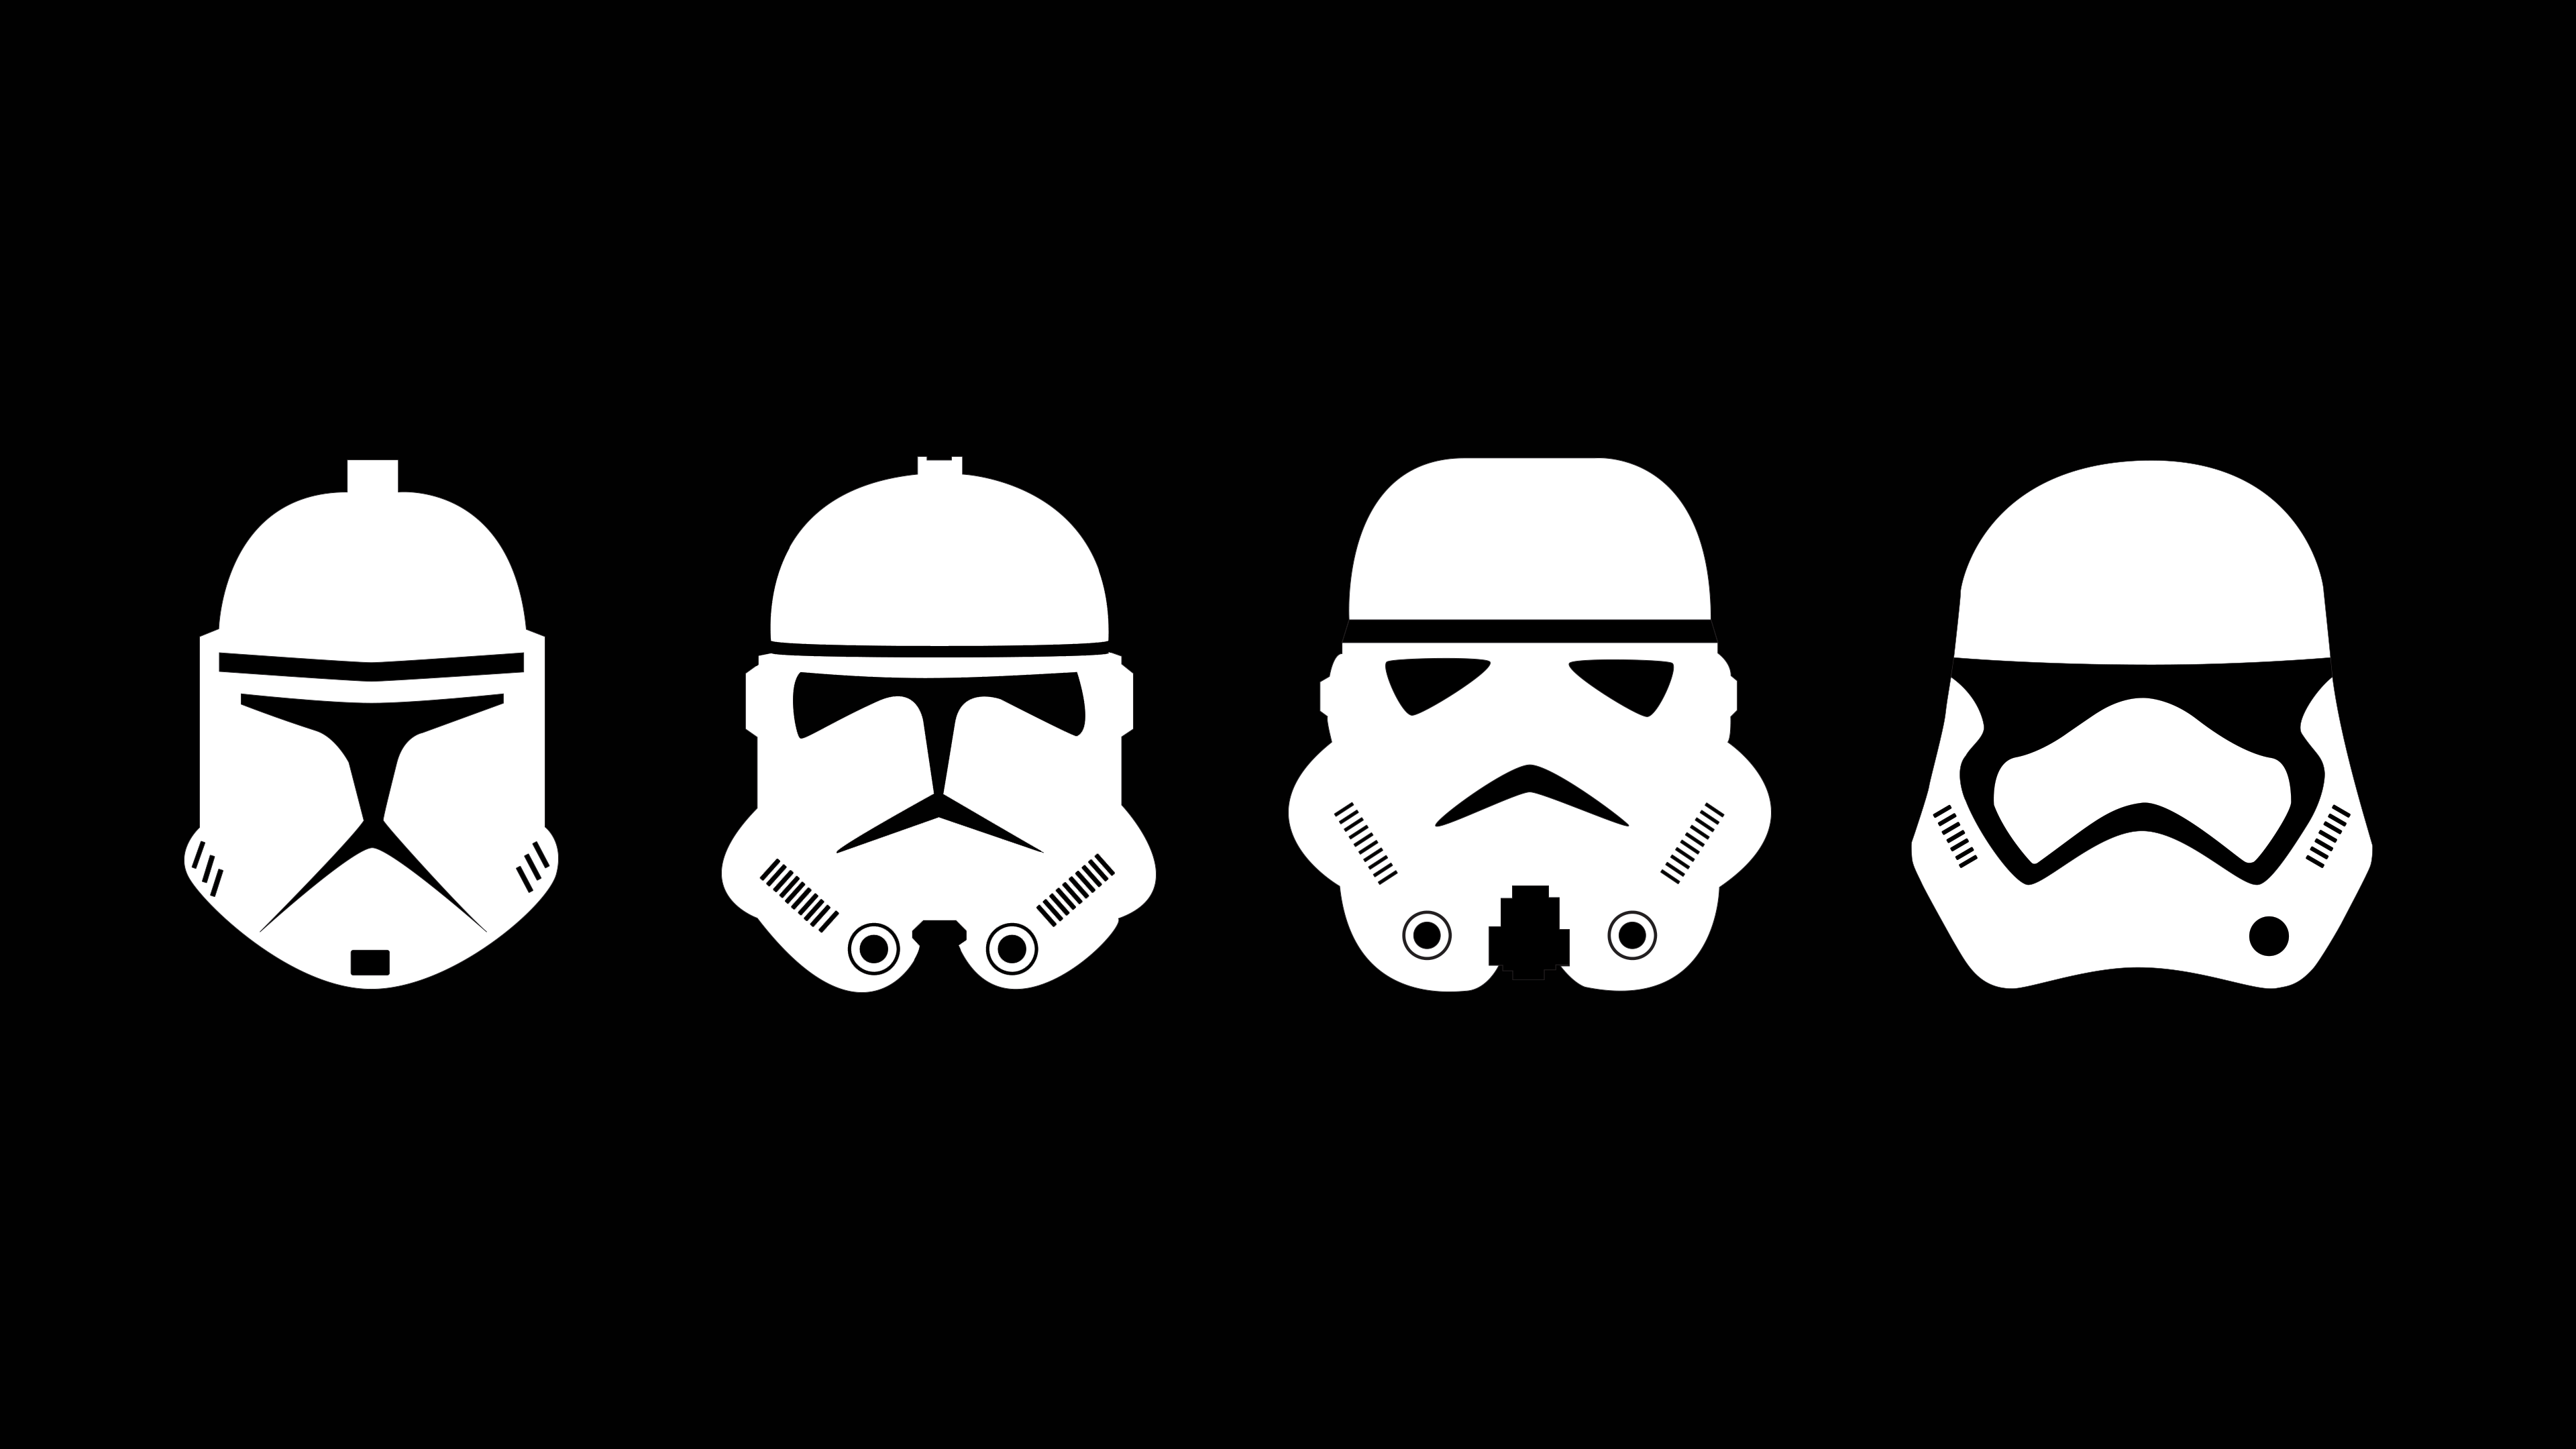 I made a minimal Star Wars wallpaper